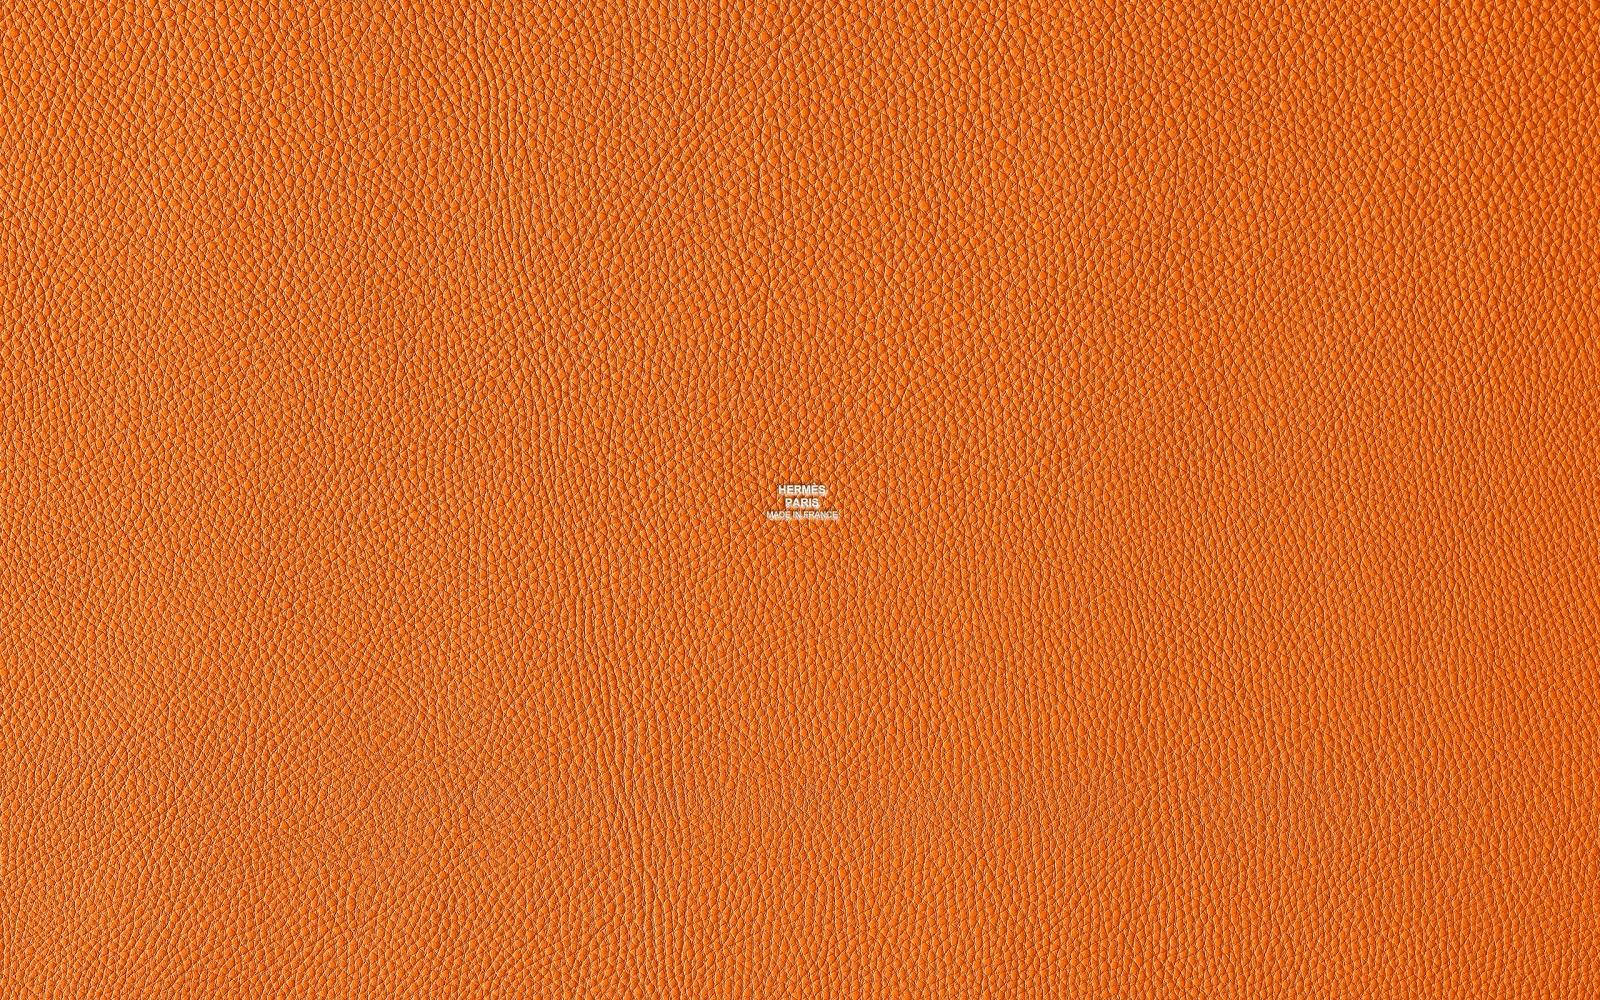 Hermes Logo On Textured Orange Background Background